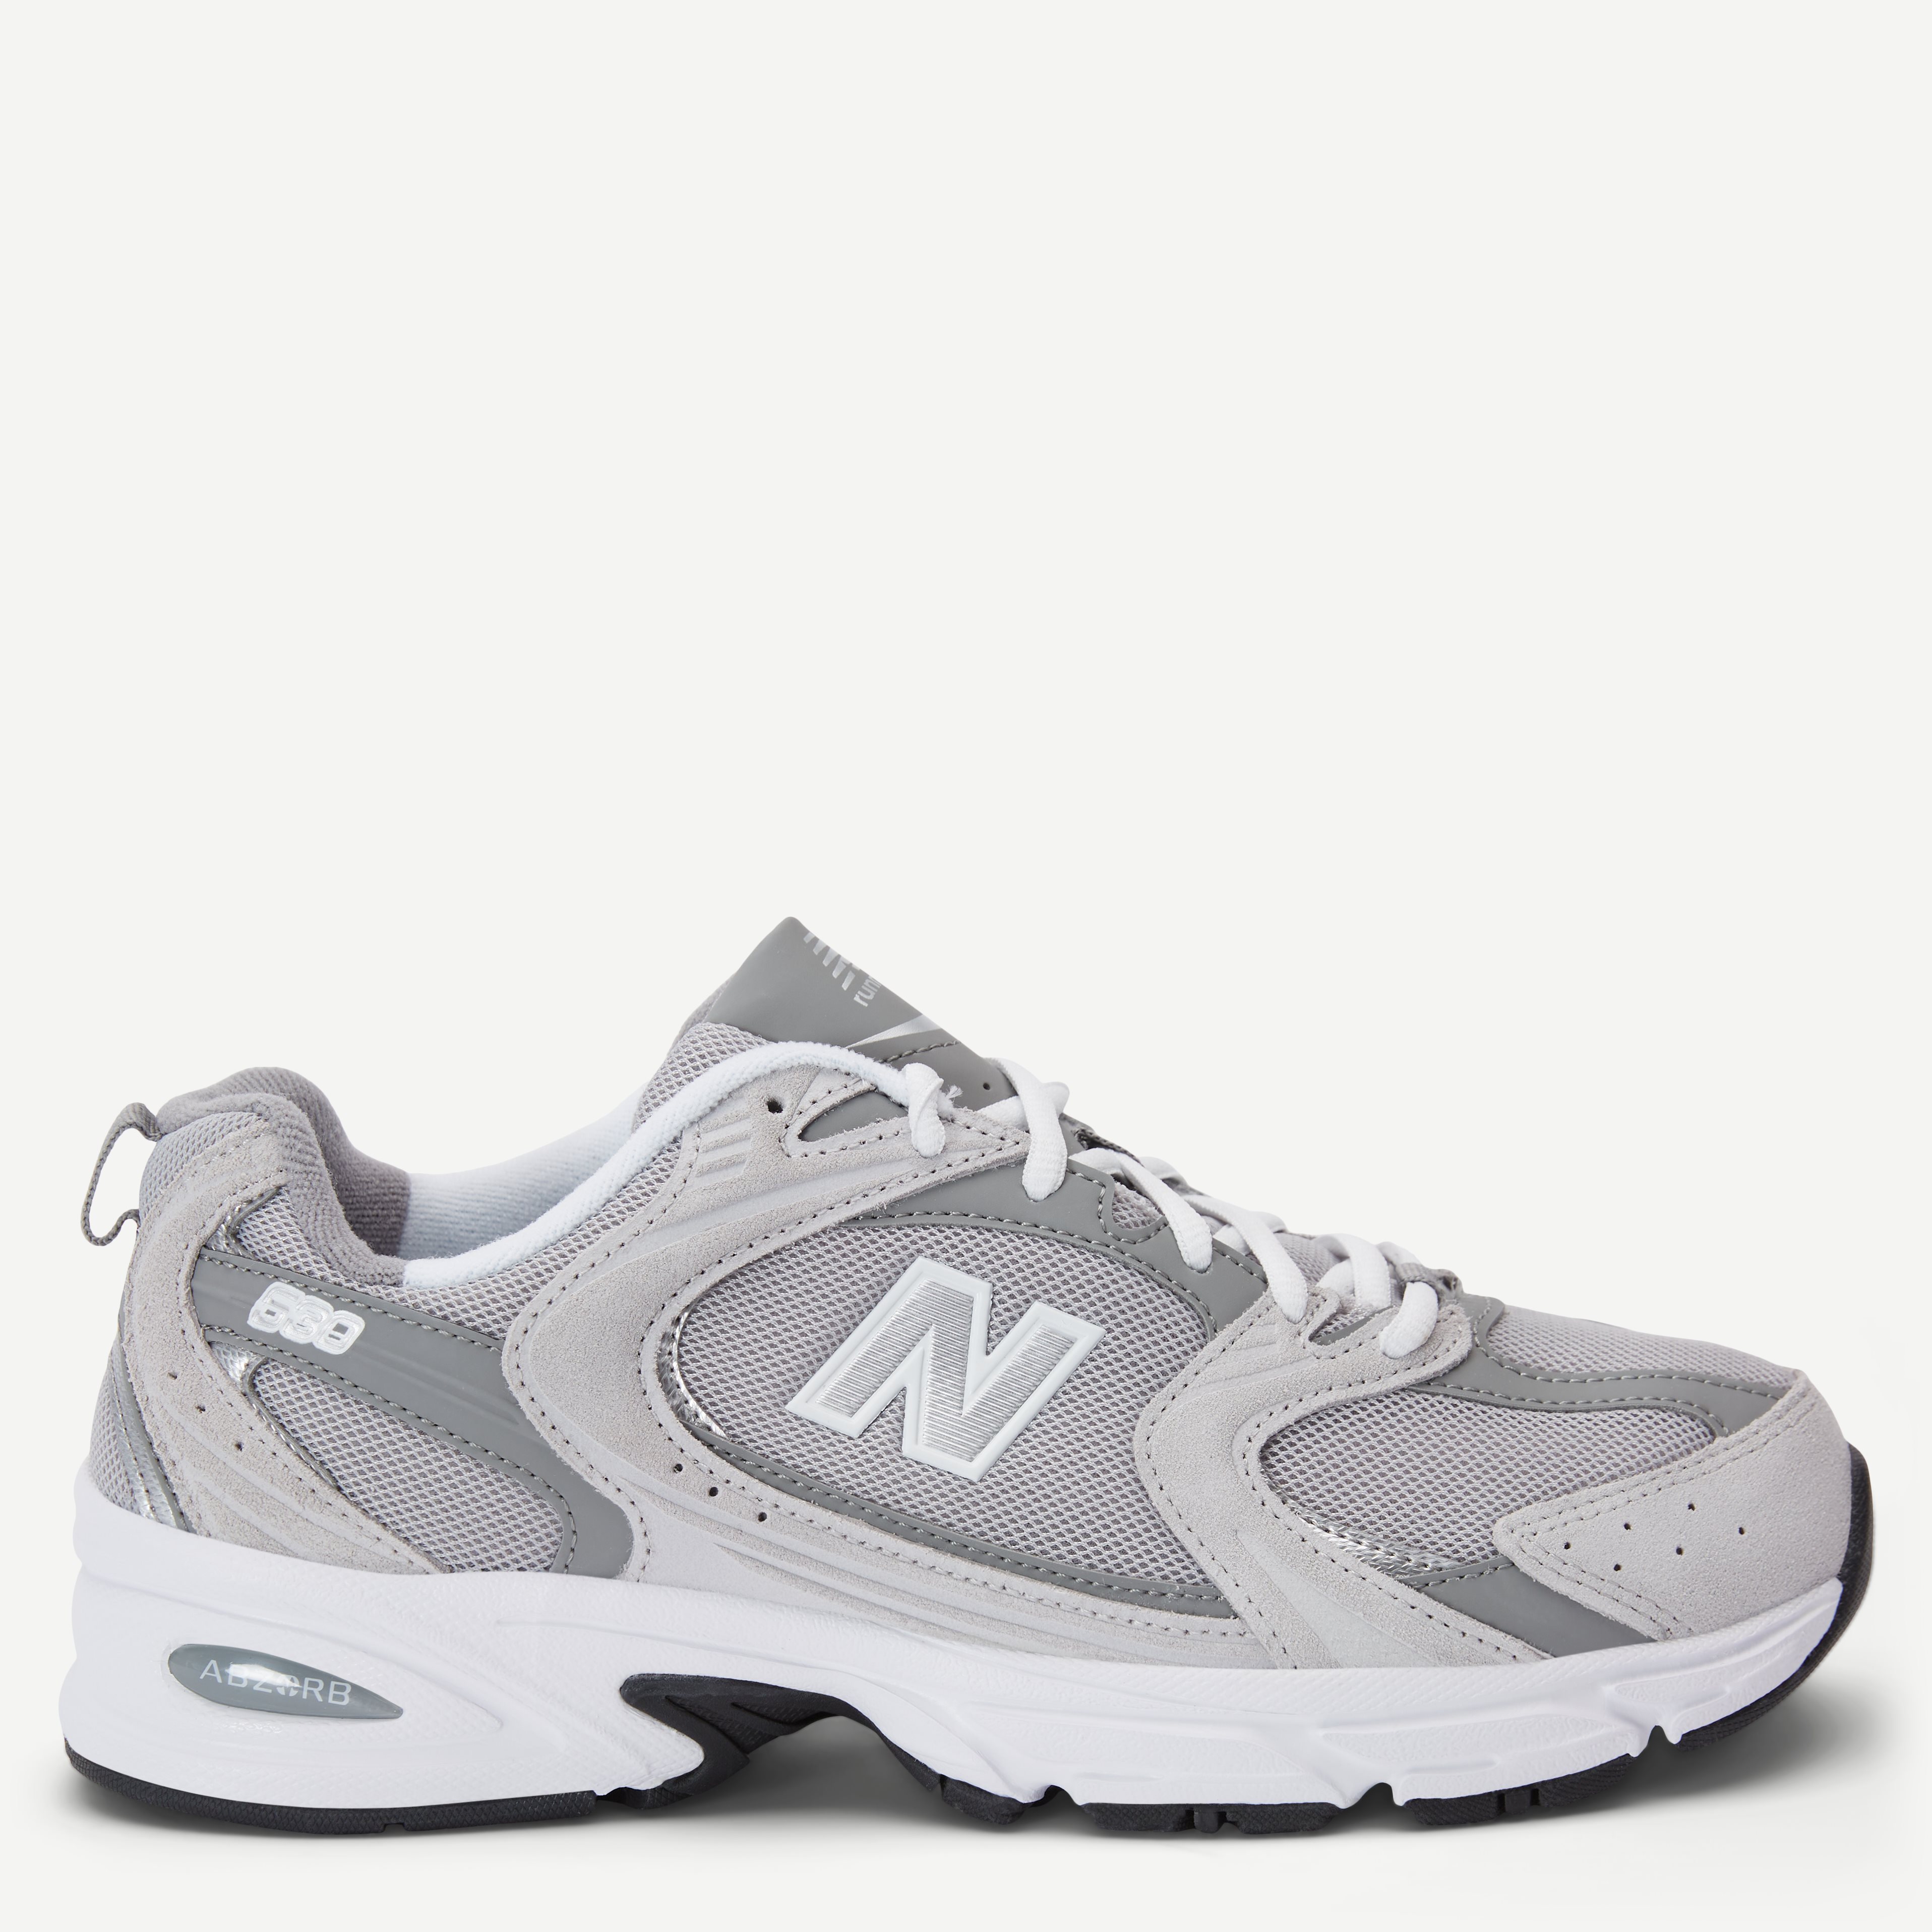 New Balance Shoes MR530 CK Grey